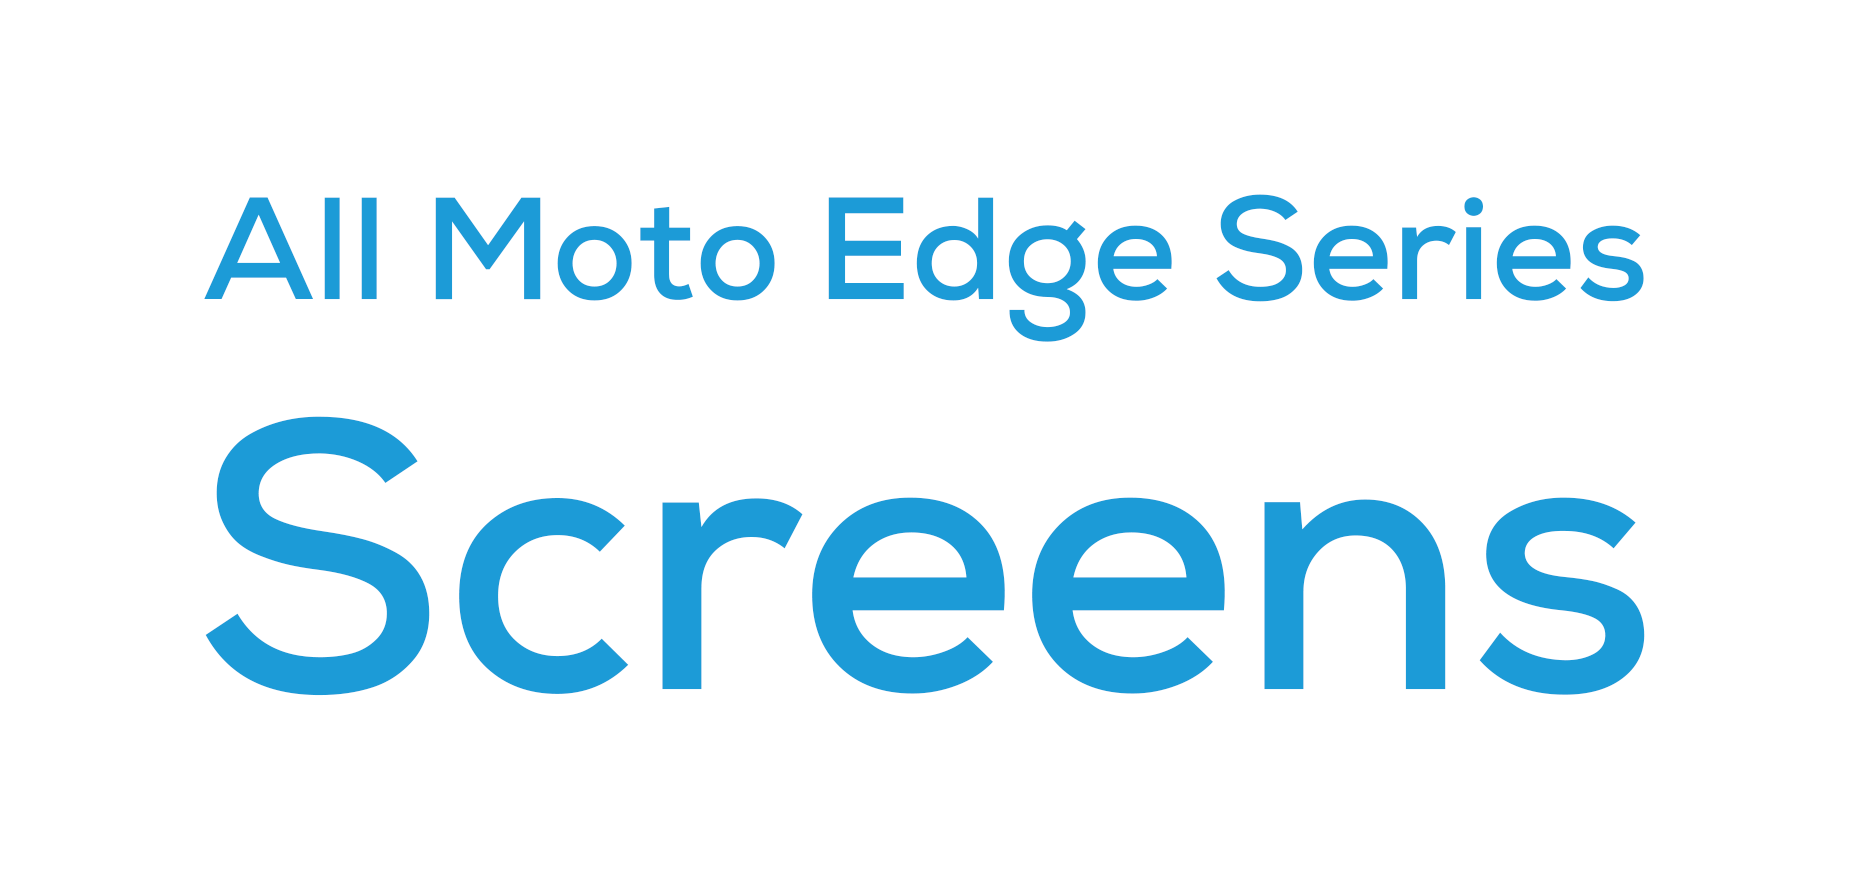 All Moto Edge Series Screens